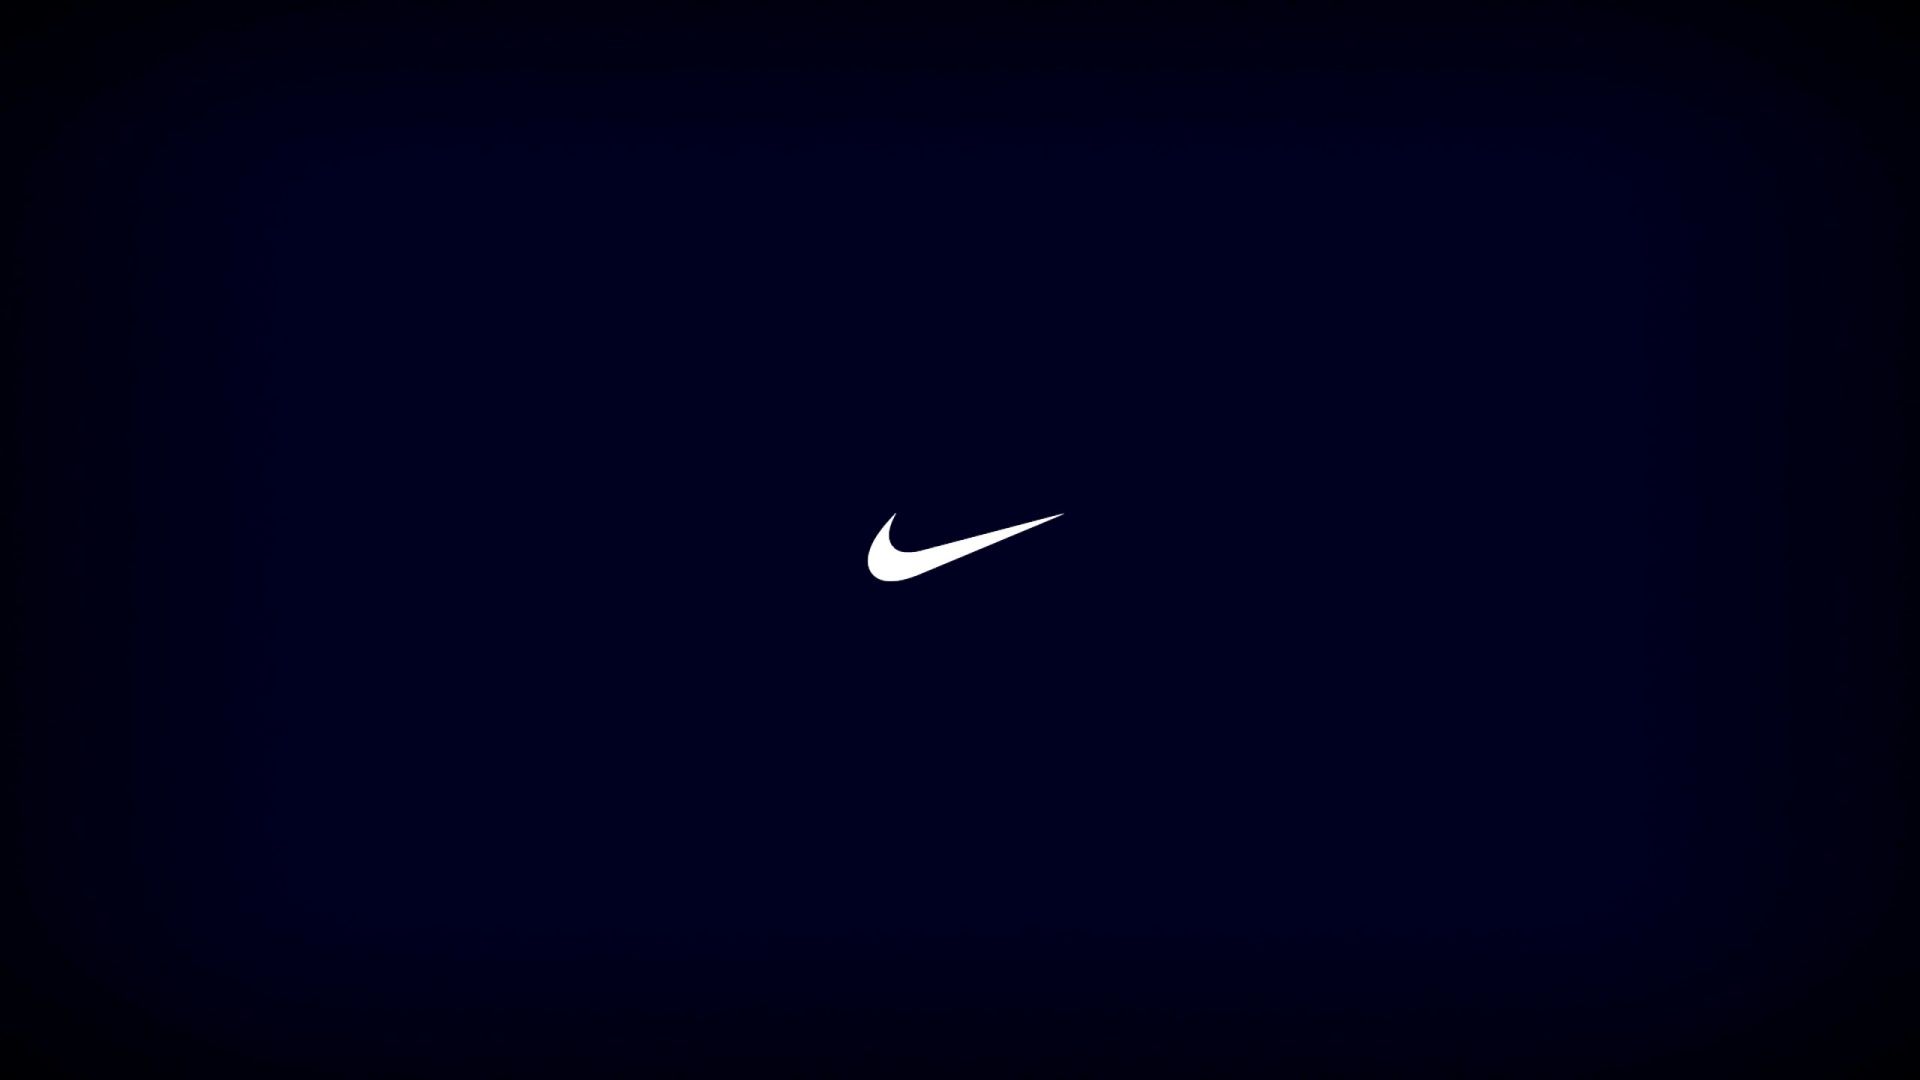 Nike Logo On The Blue Background Wallpaper Des #6930 Wallpaper ...